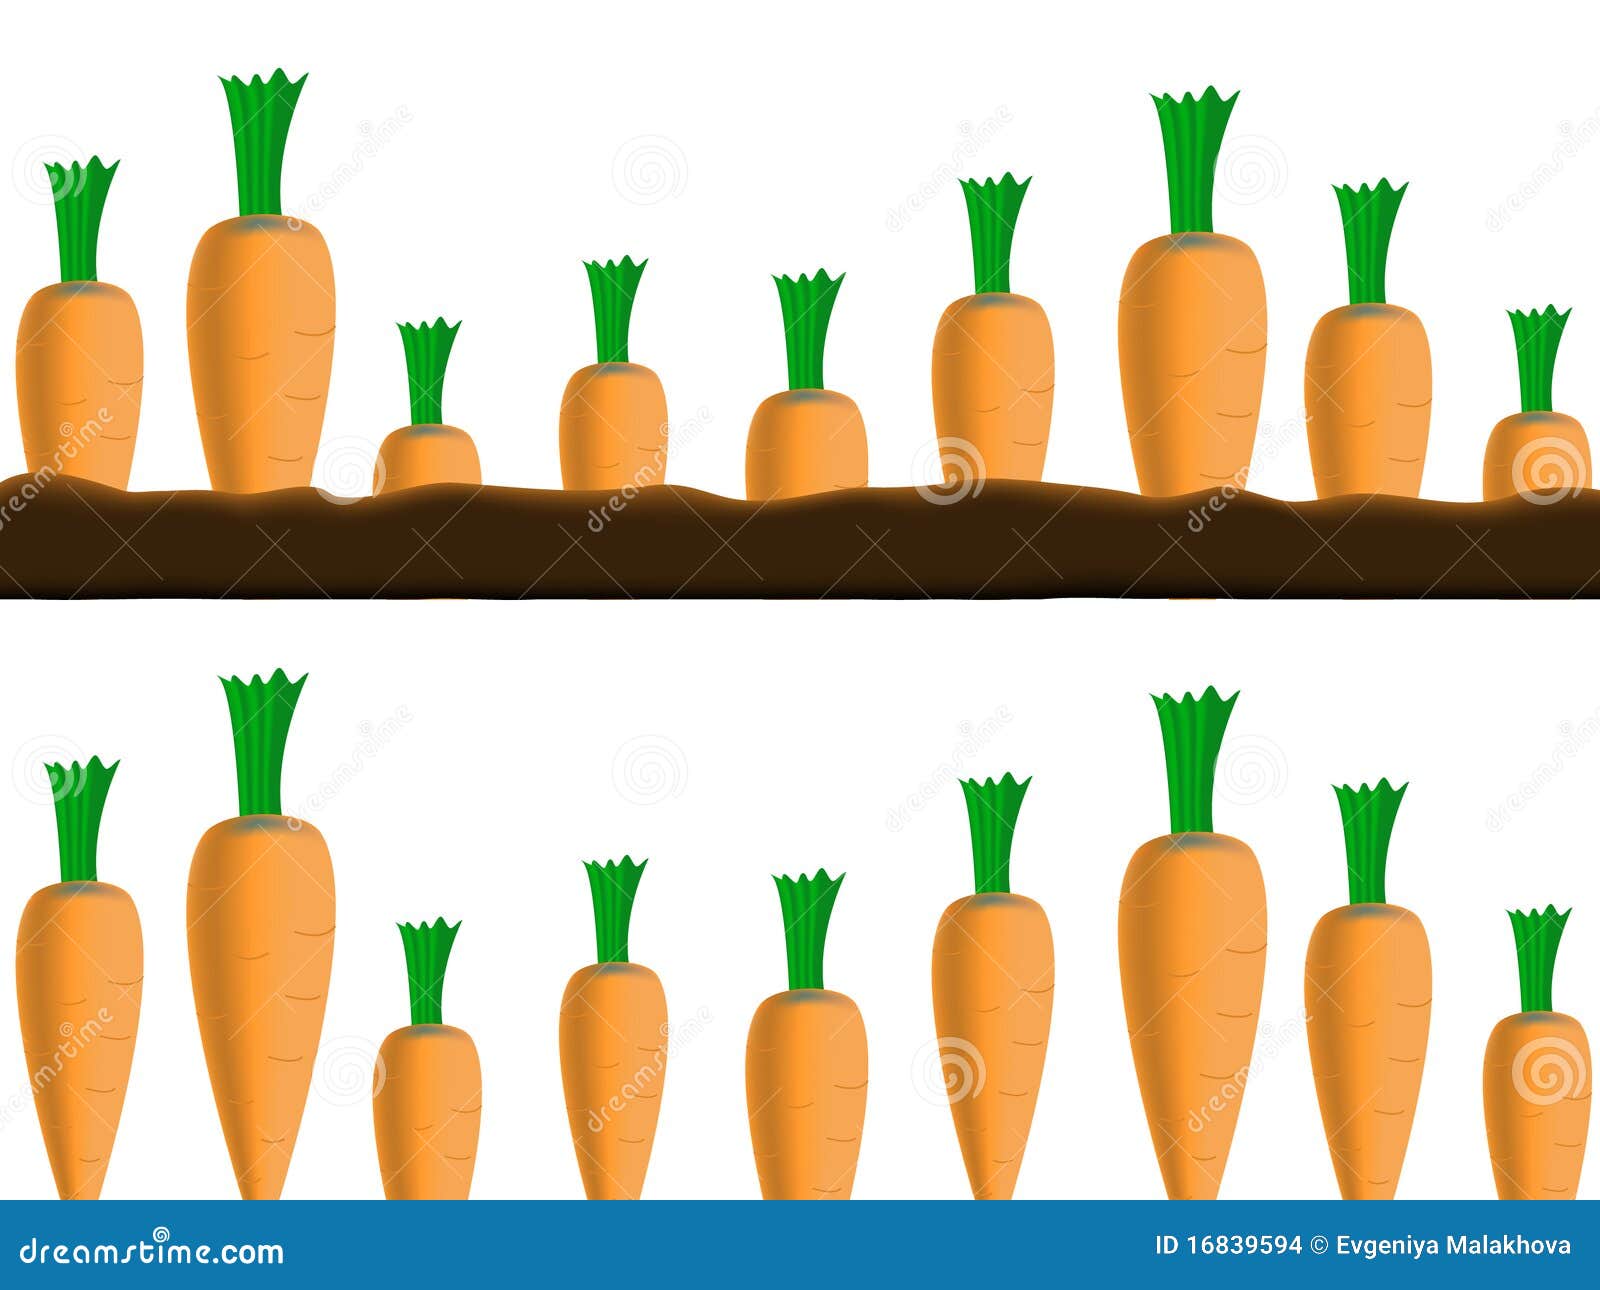 Carrots borders stock vector. Illustration of food, crop - 16839594